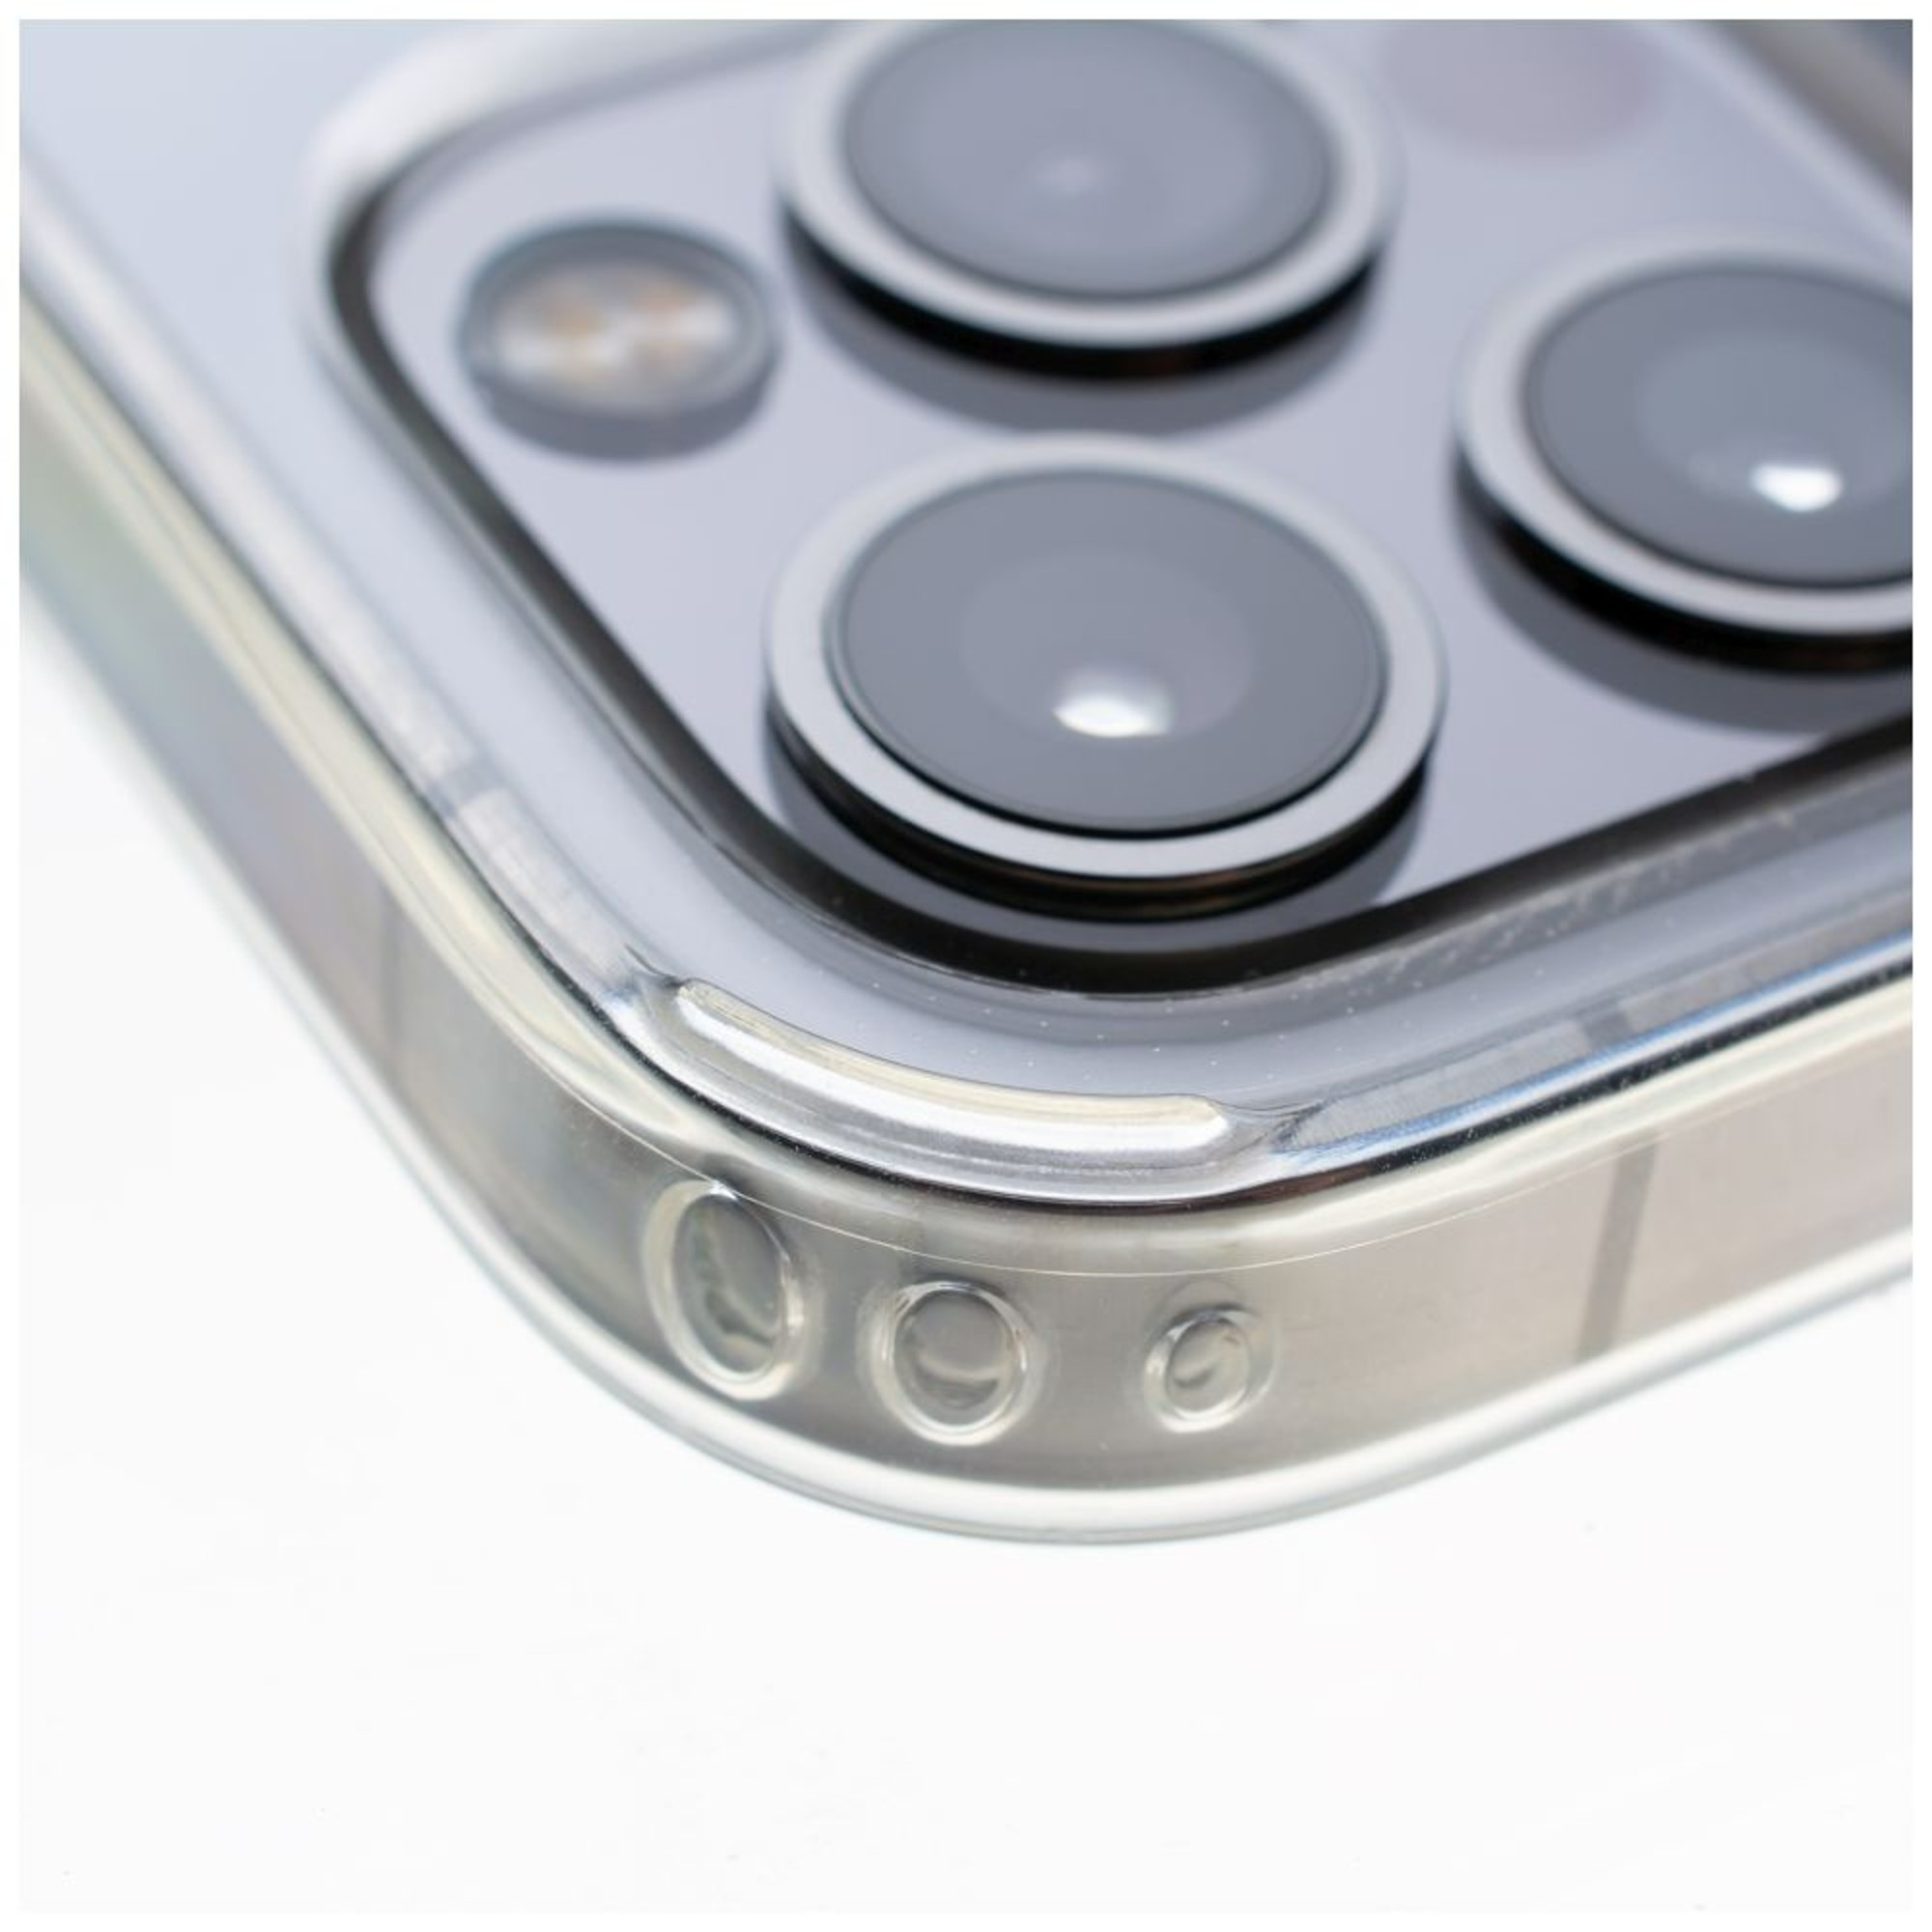 15 FIXED FIXPUM-1201, Backcover, iPhone Plus, MagPure Transparent Apple,